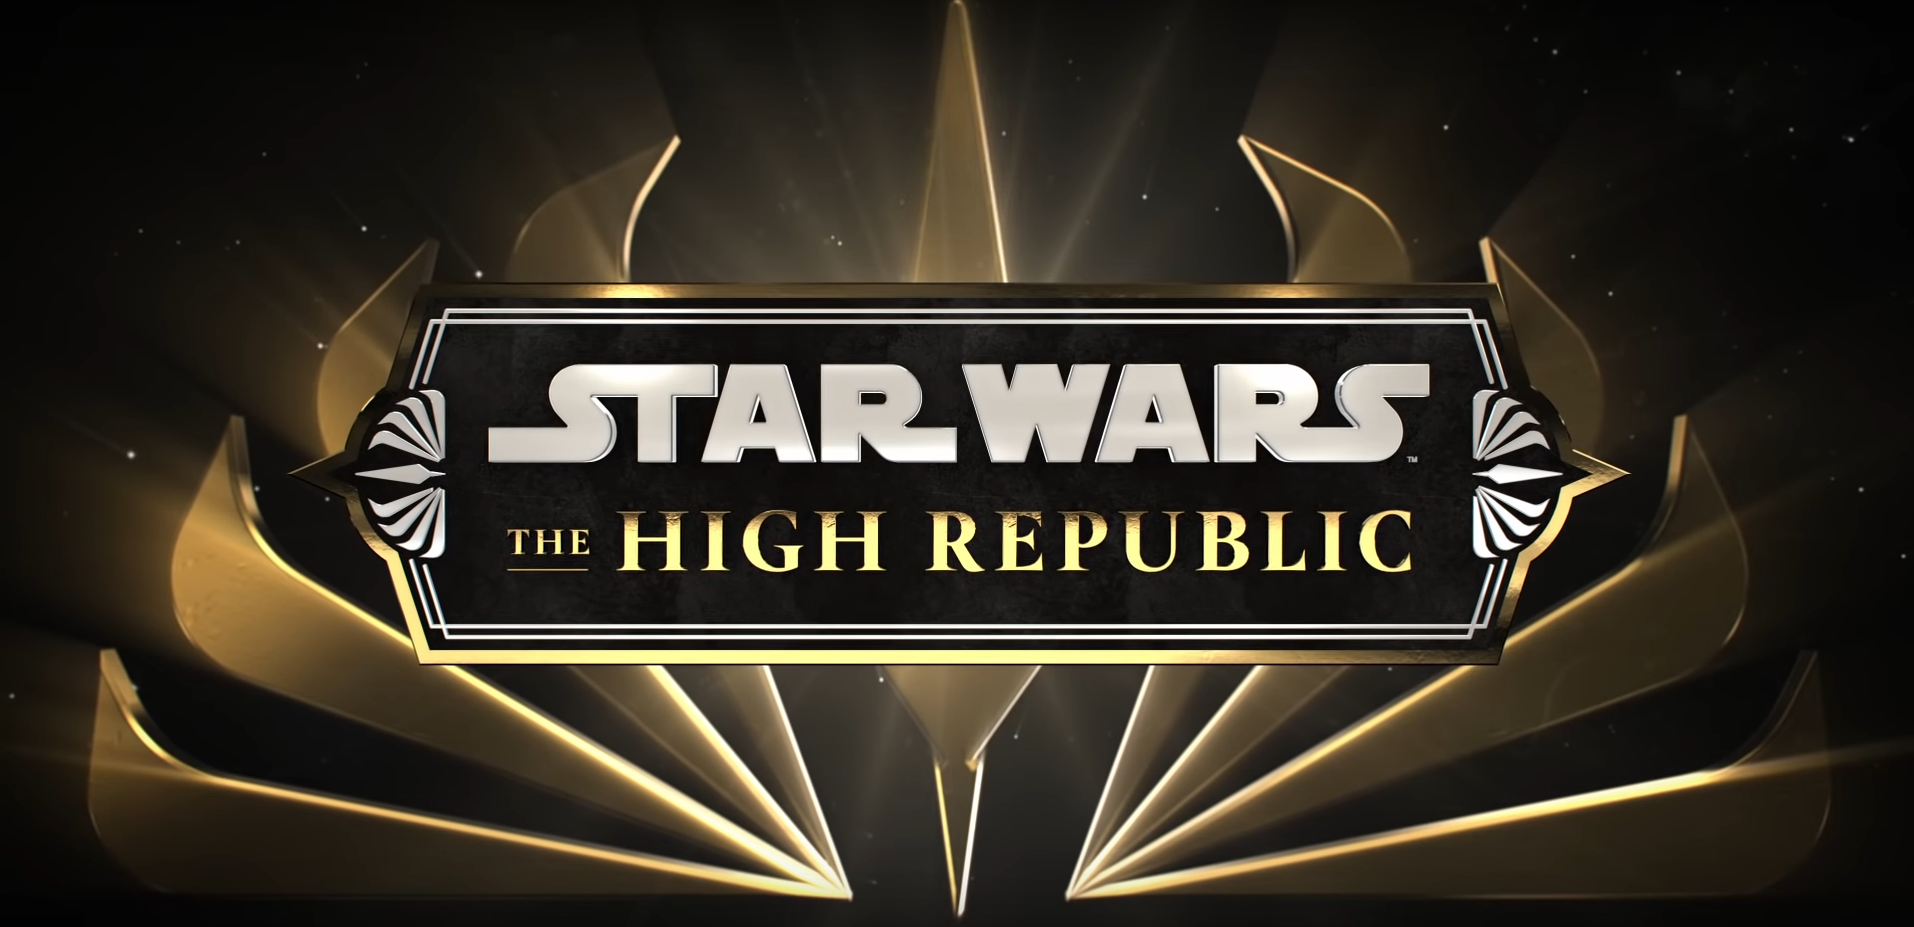 The High Republic